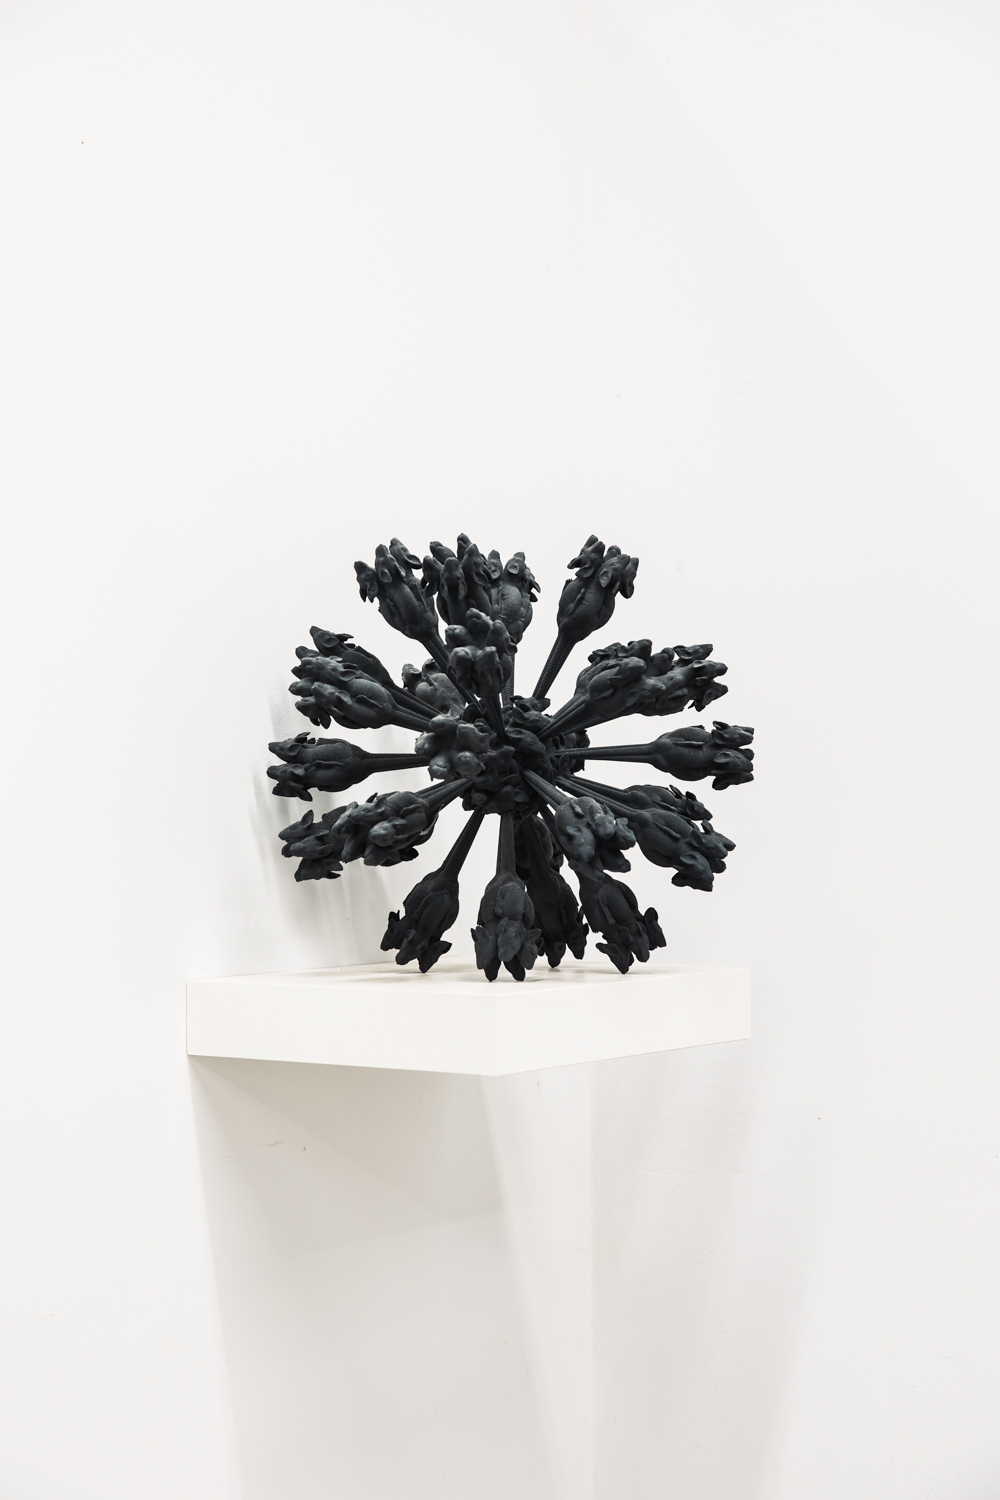 3D-printed spore sculpture